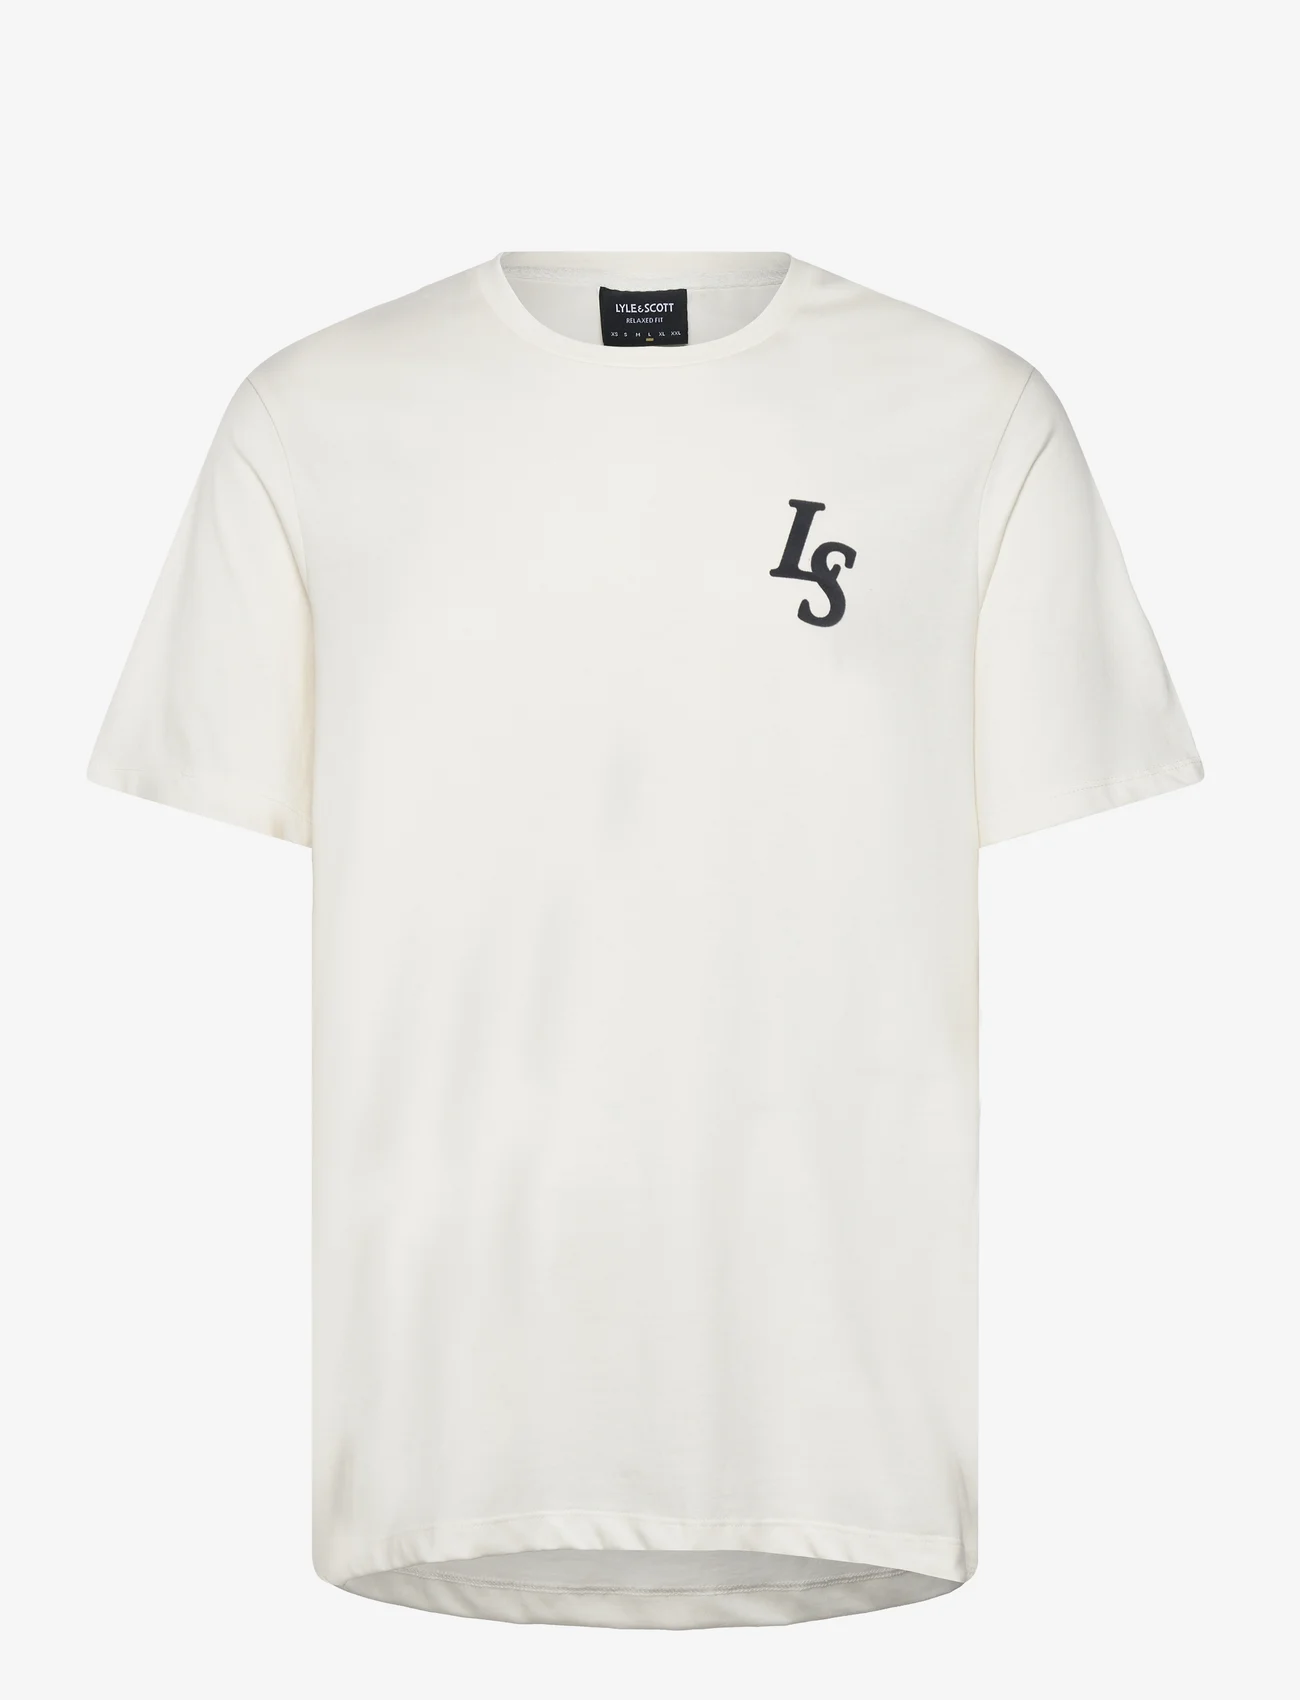 Lyle & Scott - Club Emblem T-Shirt - kortermede t-skjorter - x157 chalk - 0